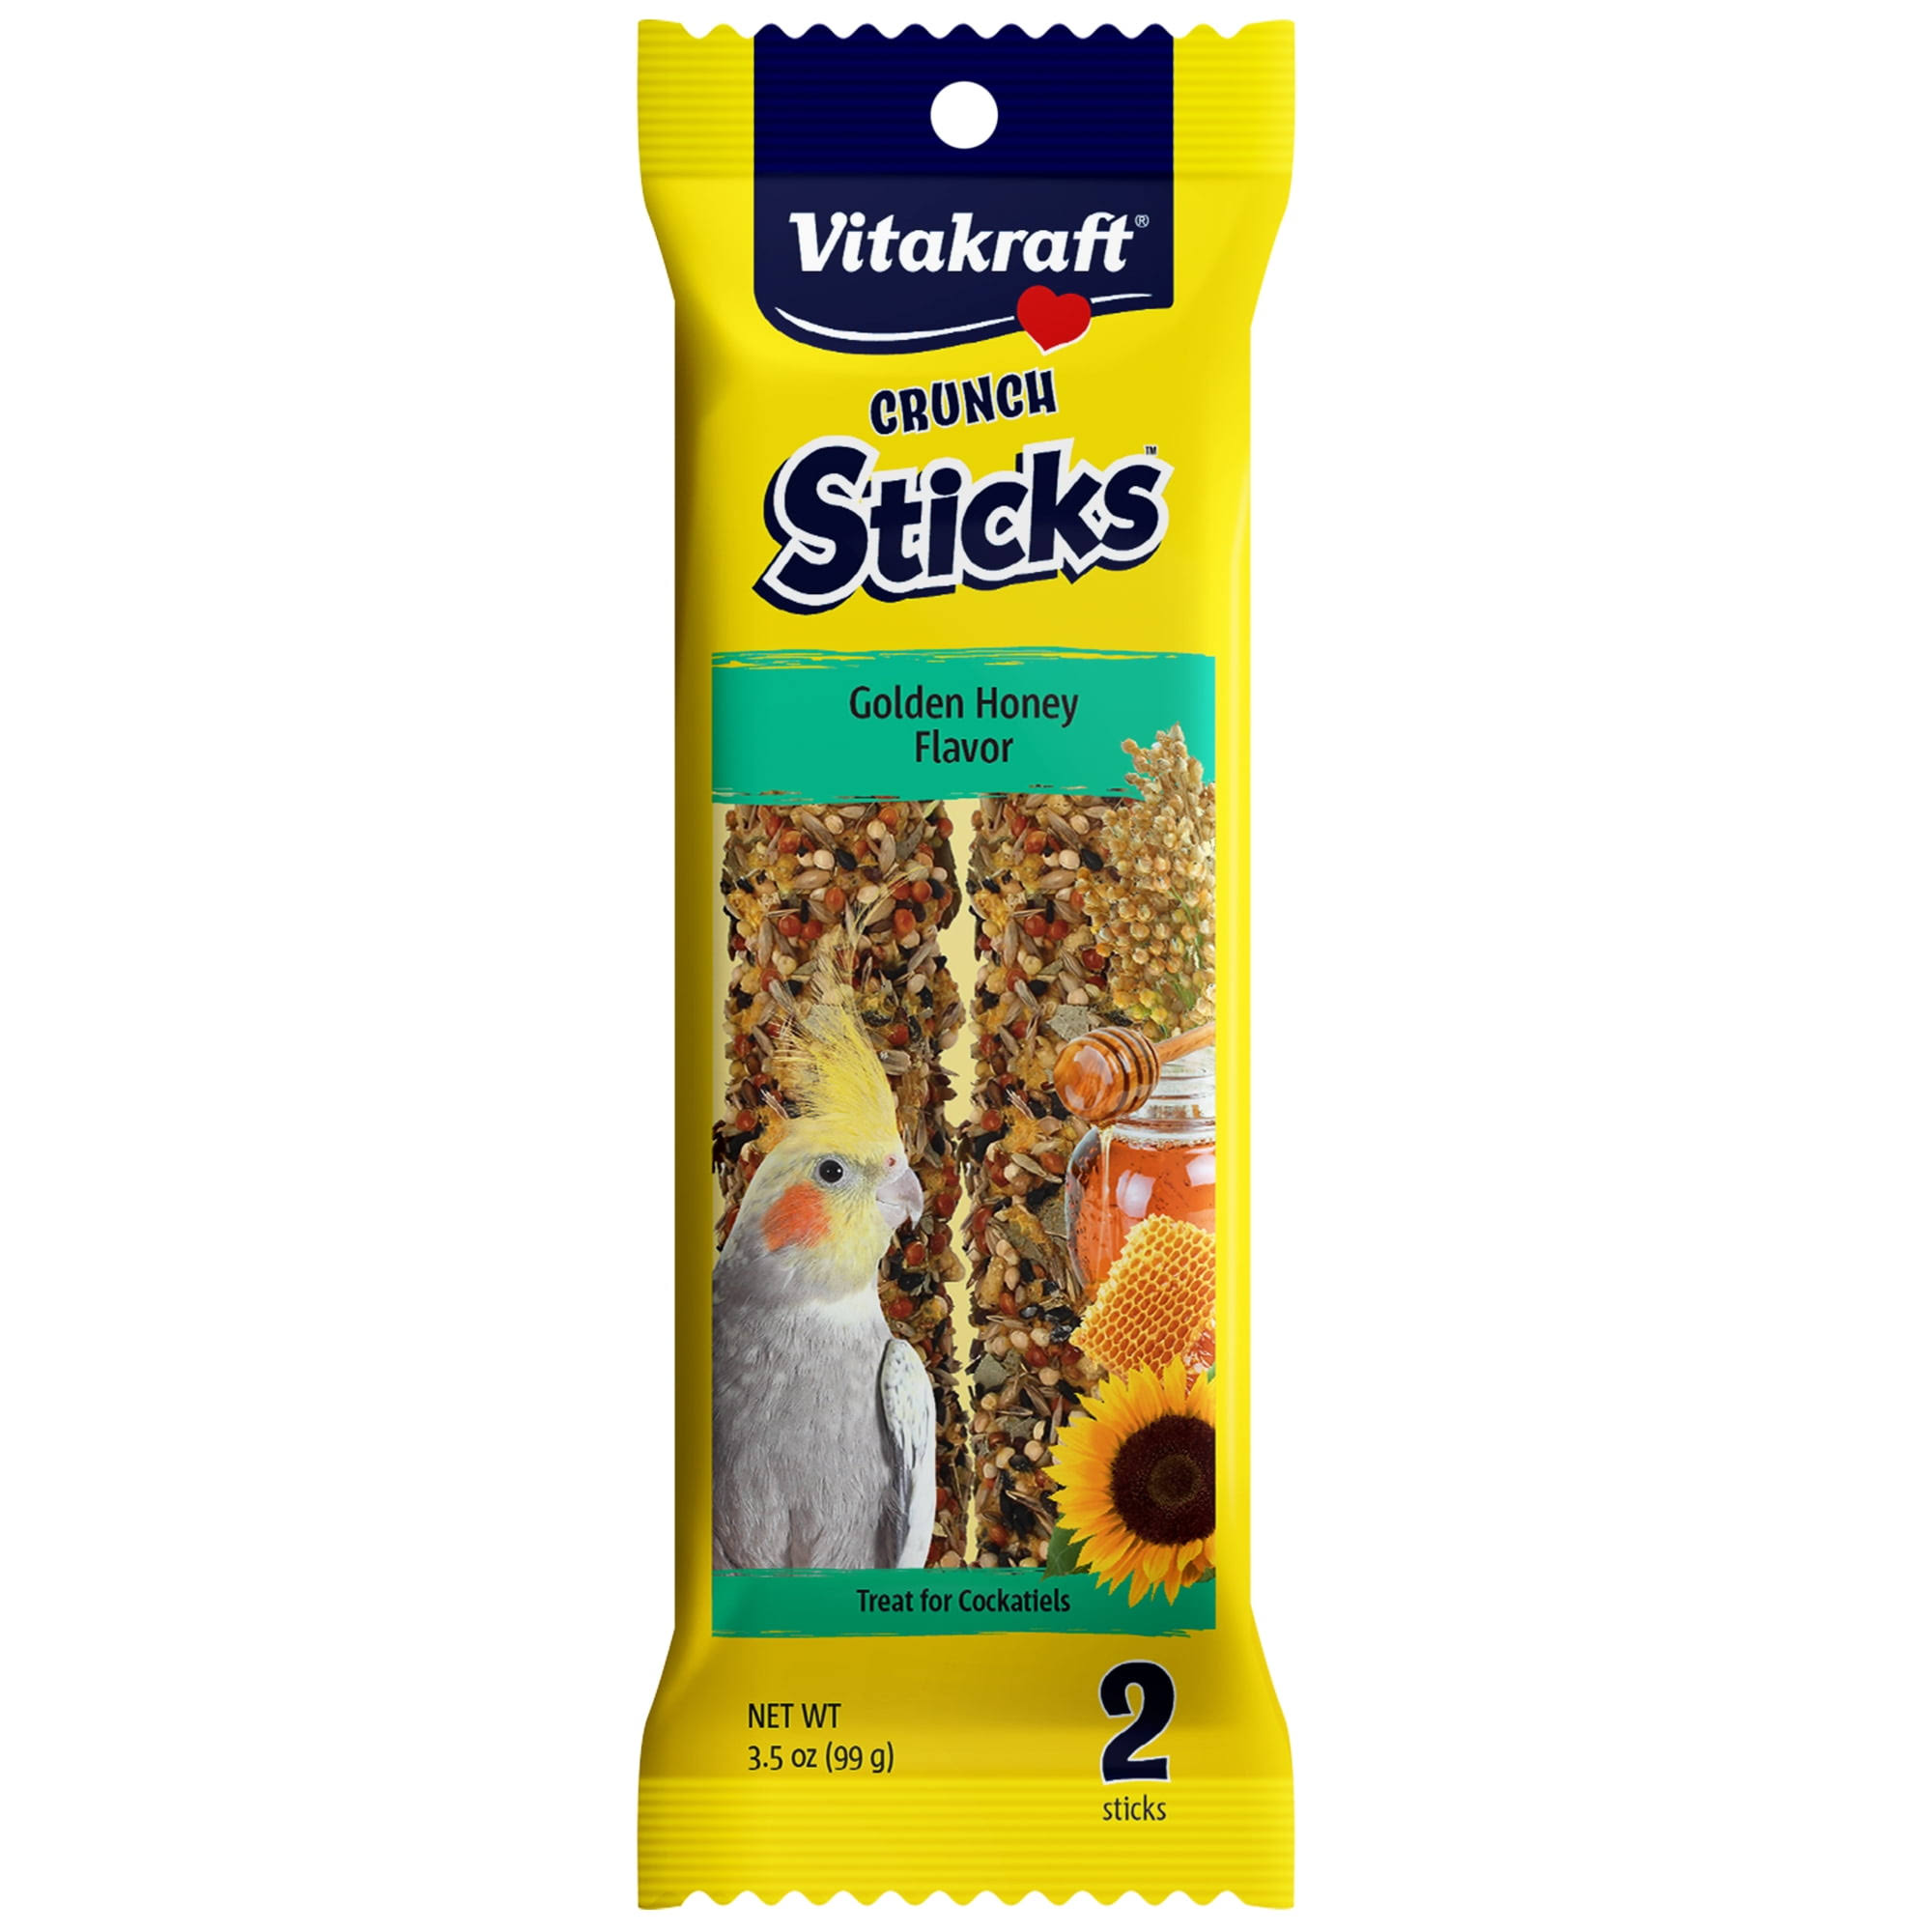 Vitakraft Crunch Sticks Golden Honey Flavor Cockatiel Treat 3.5 oz